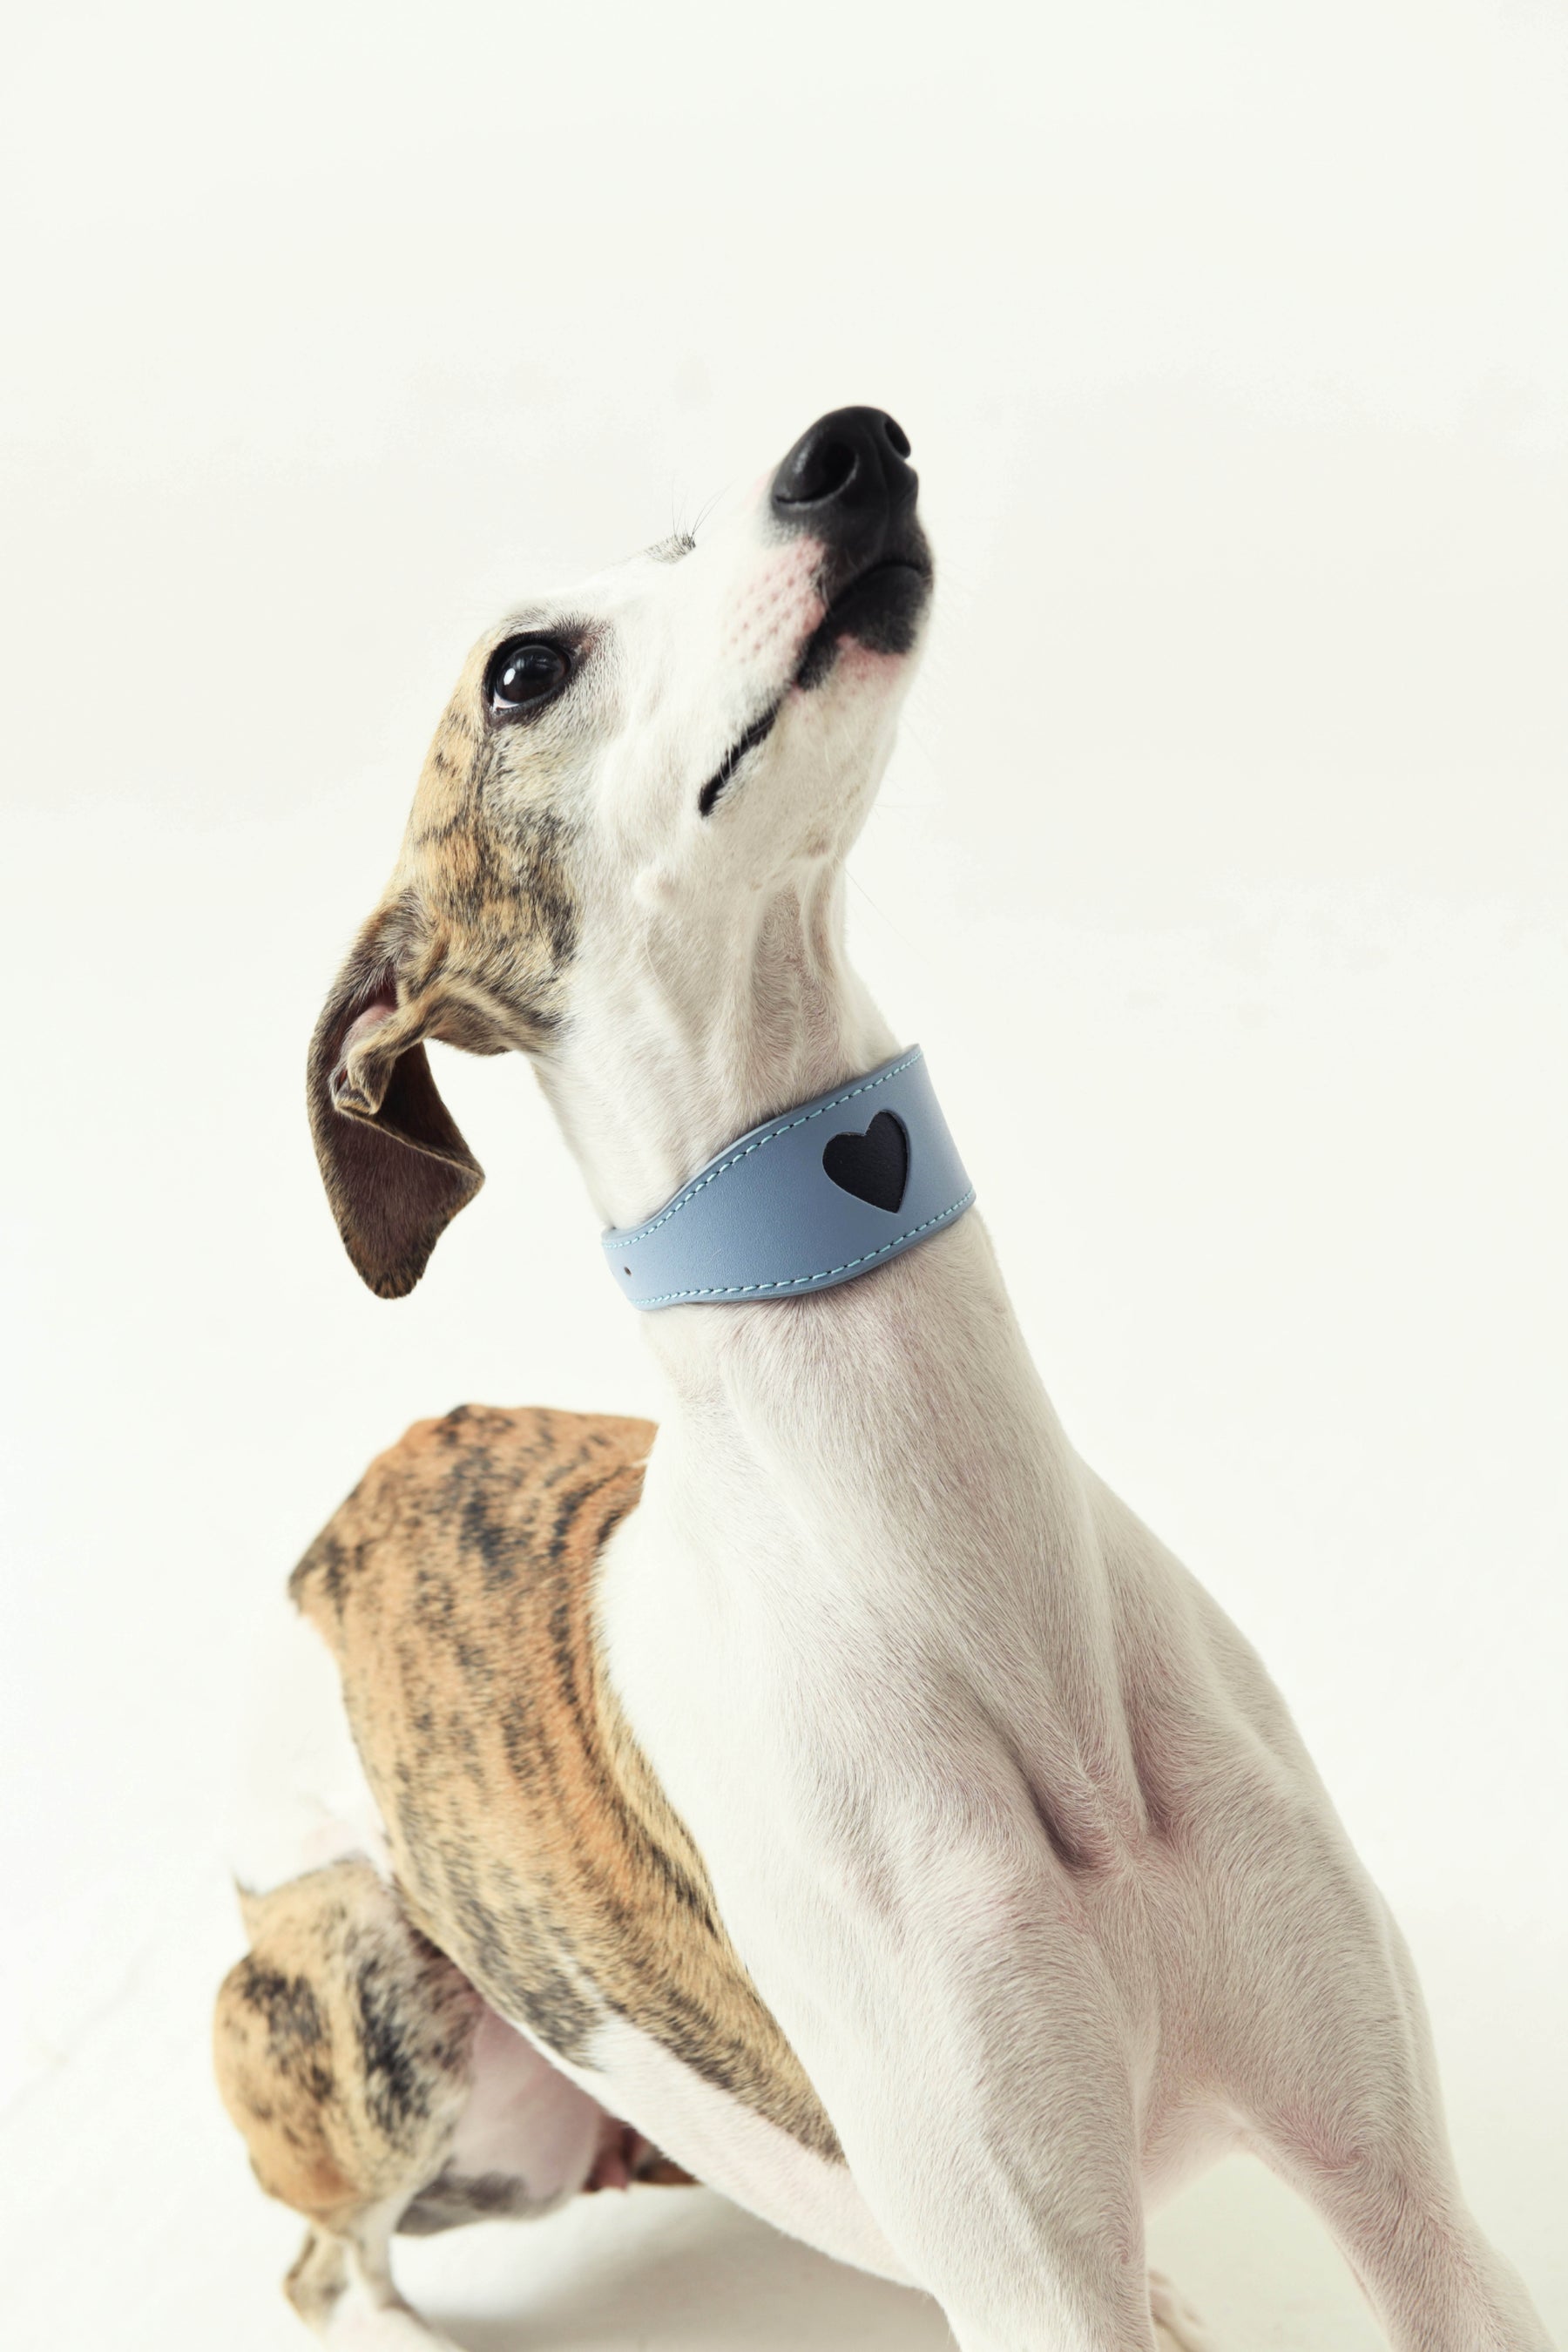 IINEED Leather Dog's Adjustable Collar